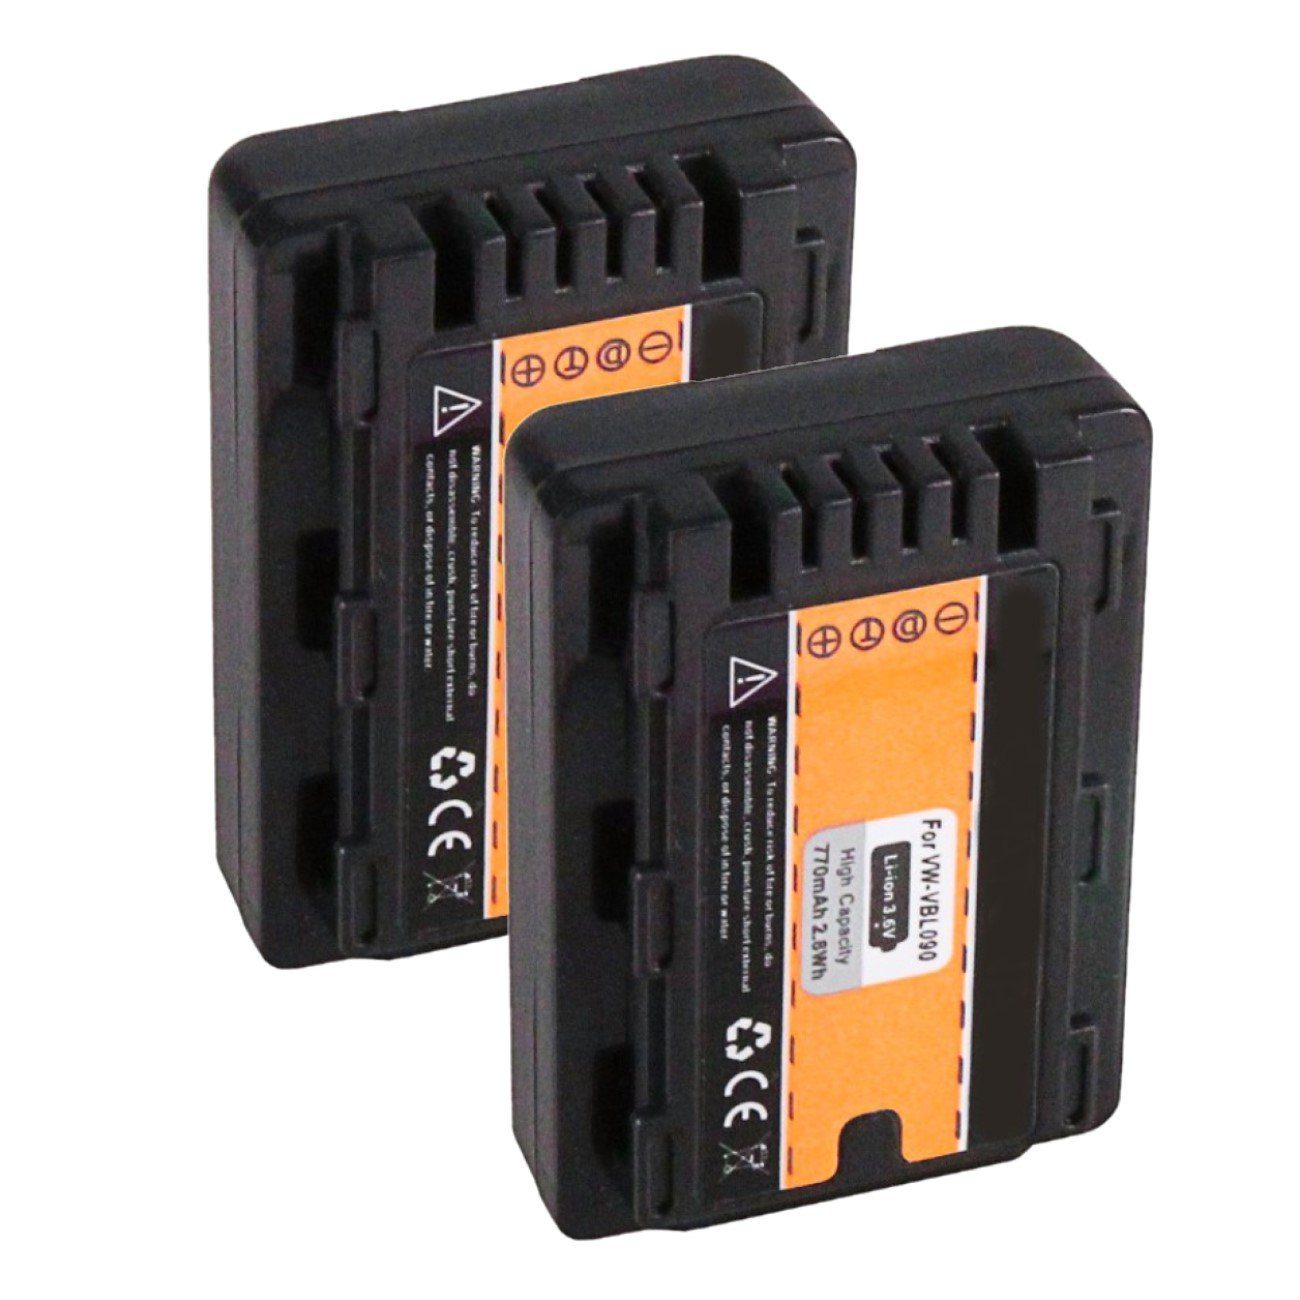 GOLDBATT 2x Akku für Panasonic HDC-SDX SDR-S50 S50A S50K S50N T50 T50S VW-VBL090E-K VBL090 Kamera-Akku Ersatzakku 770 mAh (3,6 V, 2 St), 100% kompatibel mit den Original Akkus durch maßgefertigte Passform inklusive Überhitzungsschutz